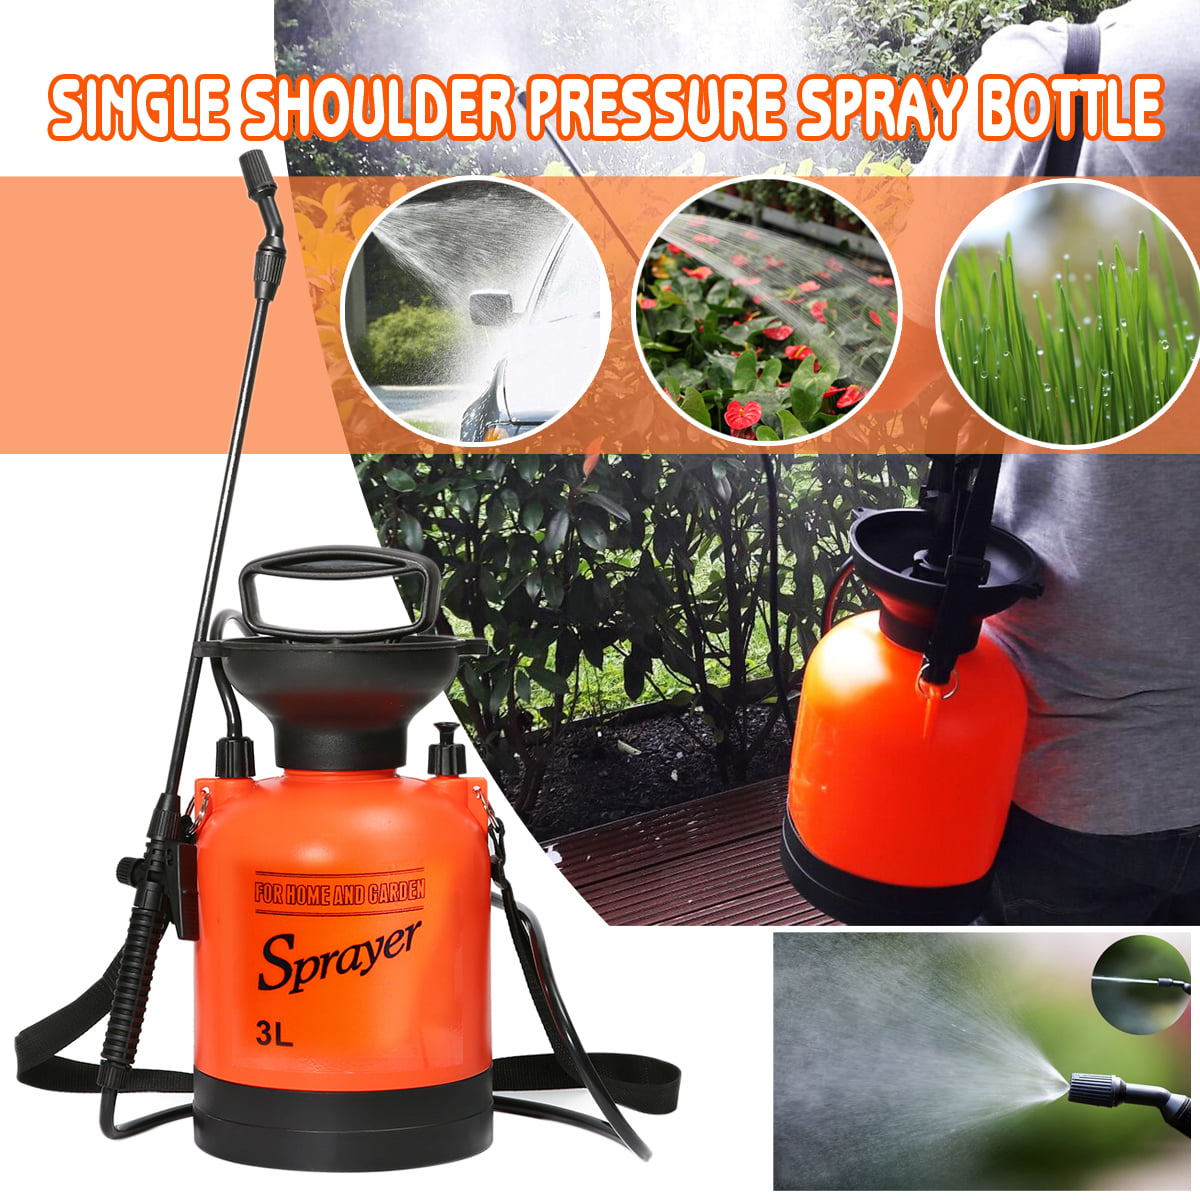 Portable Shoulder Sprayer for Home Garden Chemicals or Disinfection US SELLER 